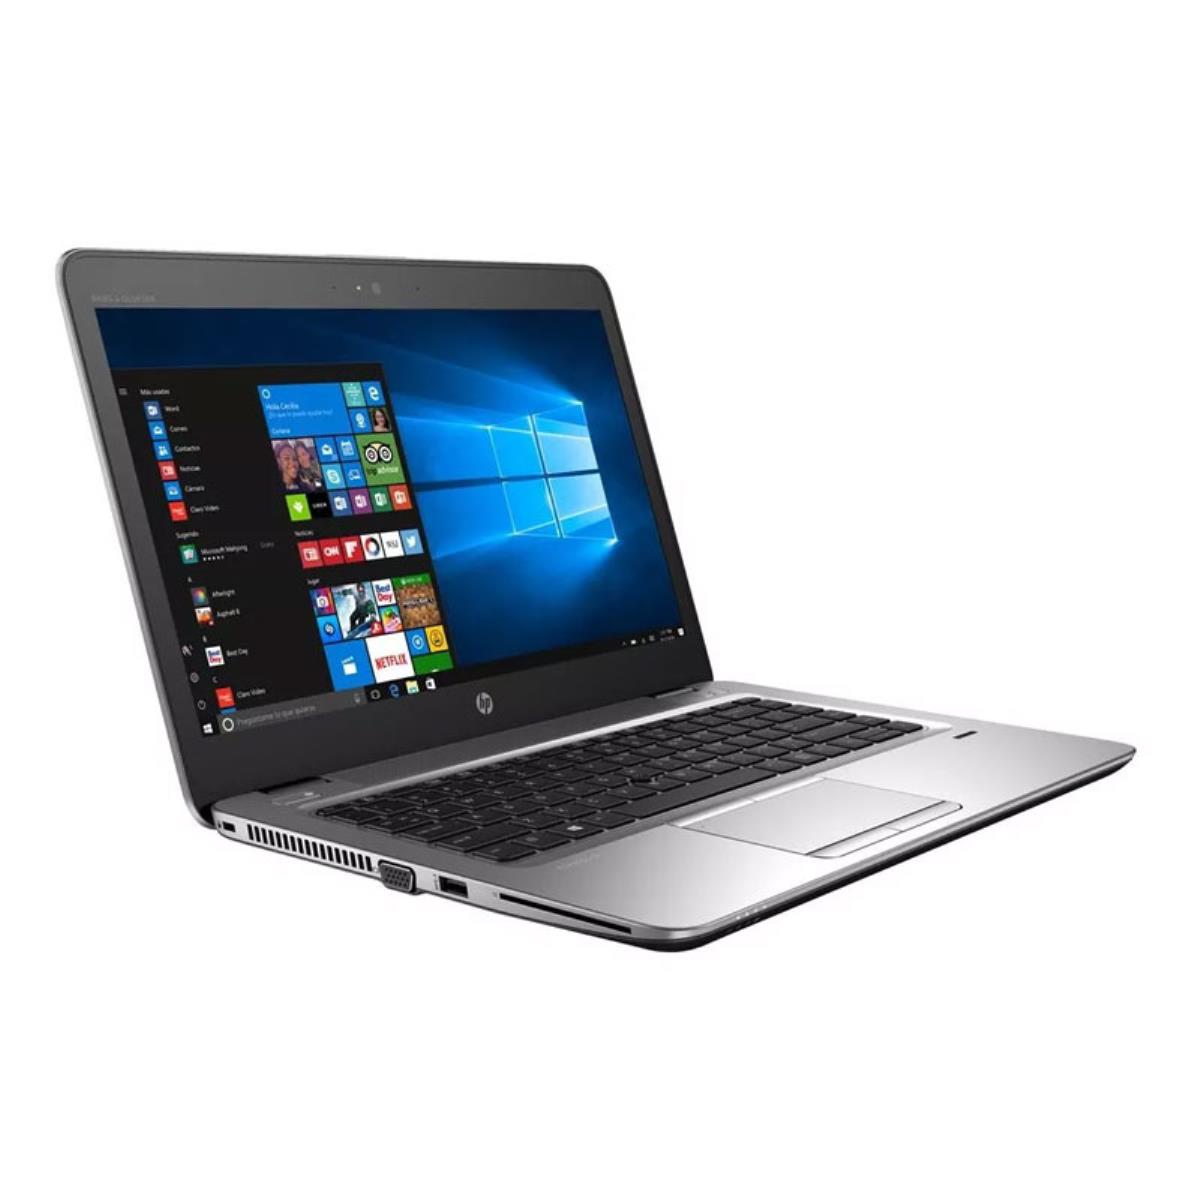 Portátil Ultrabook HP Elitebook 840 G3 GRADO B (Intel Core i7 6500U 2.5Ghz/8GB/256SSD-M.2/14FHD/NO-DVD/W10P) Preinstlado